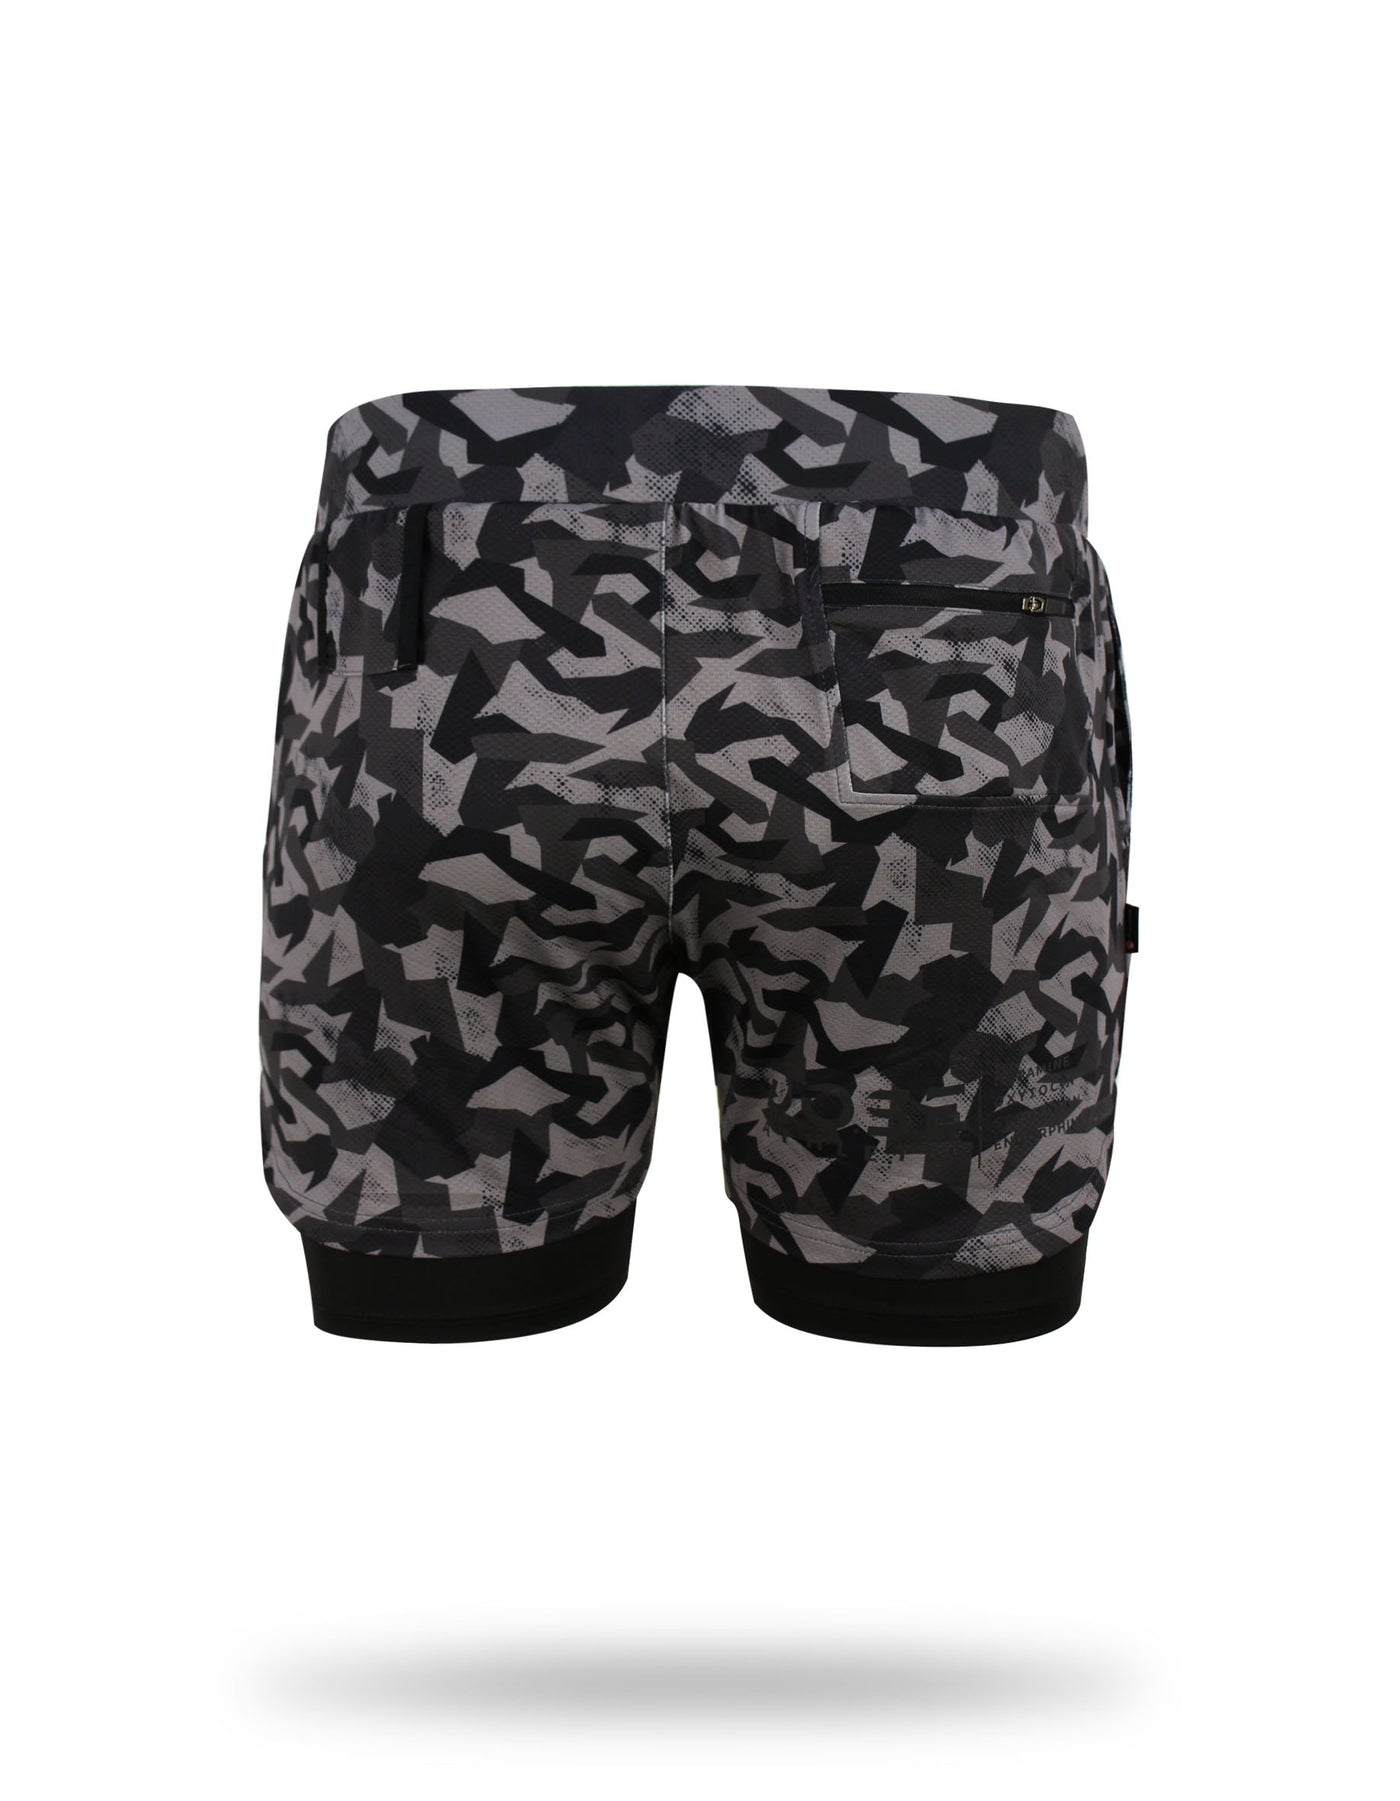 Baseline Shorts (5 in. inseam) - Black Camo